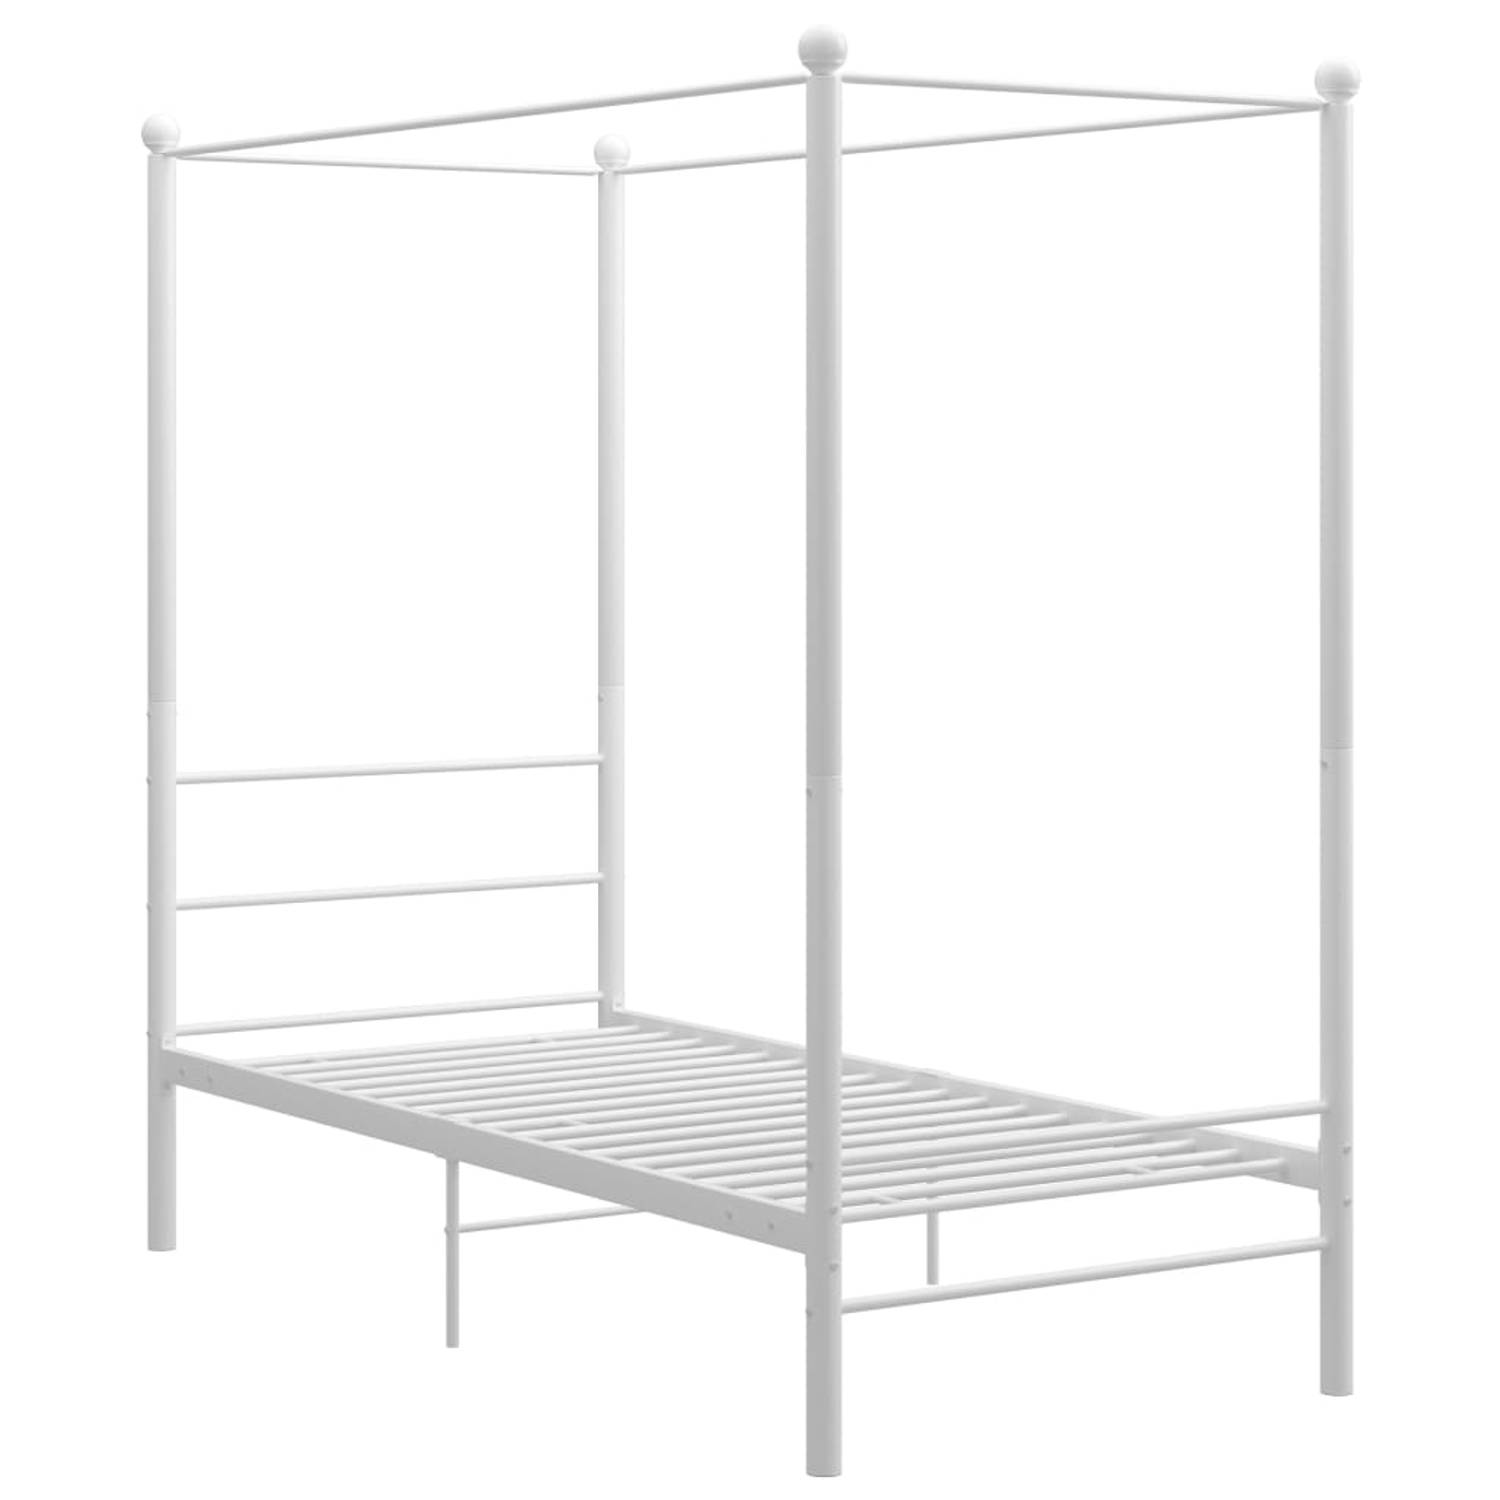 The Living Store Hemelbedframe metaal wit 90x200 cm - Bedframe - Bedframe - Bed Frame - Bed Frames - Bed - Bedden - Metalen Bedframe - Metalen Bedframes - 1-persoonsbed - 1